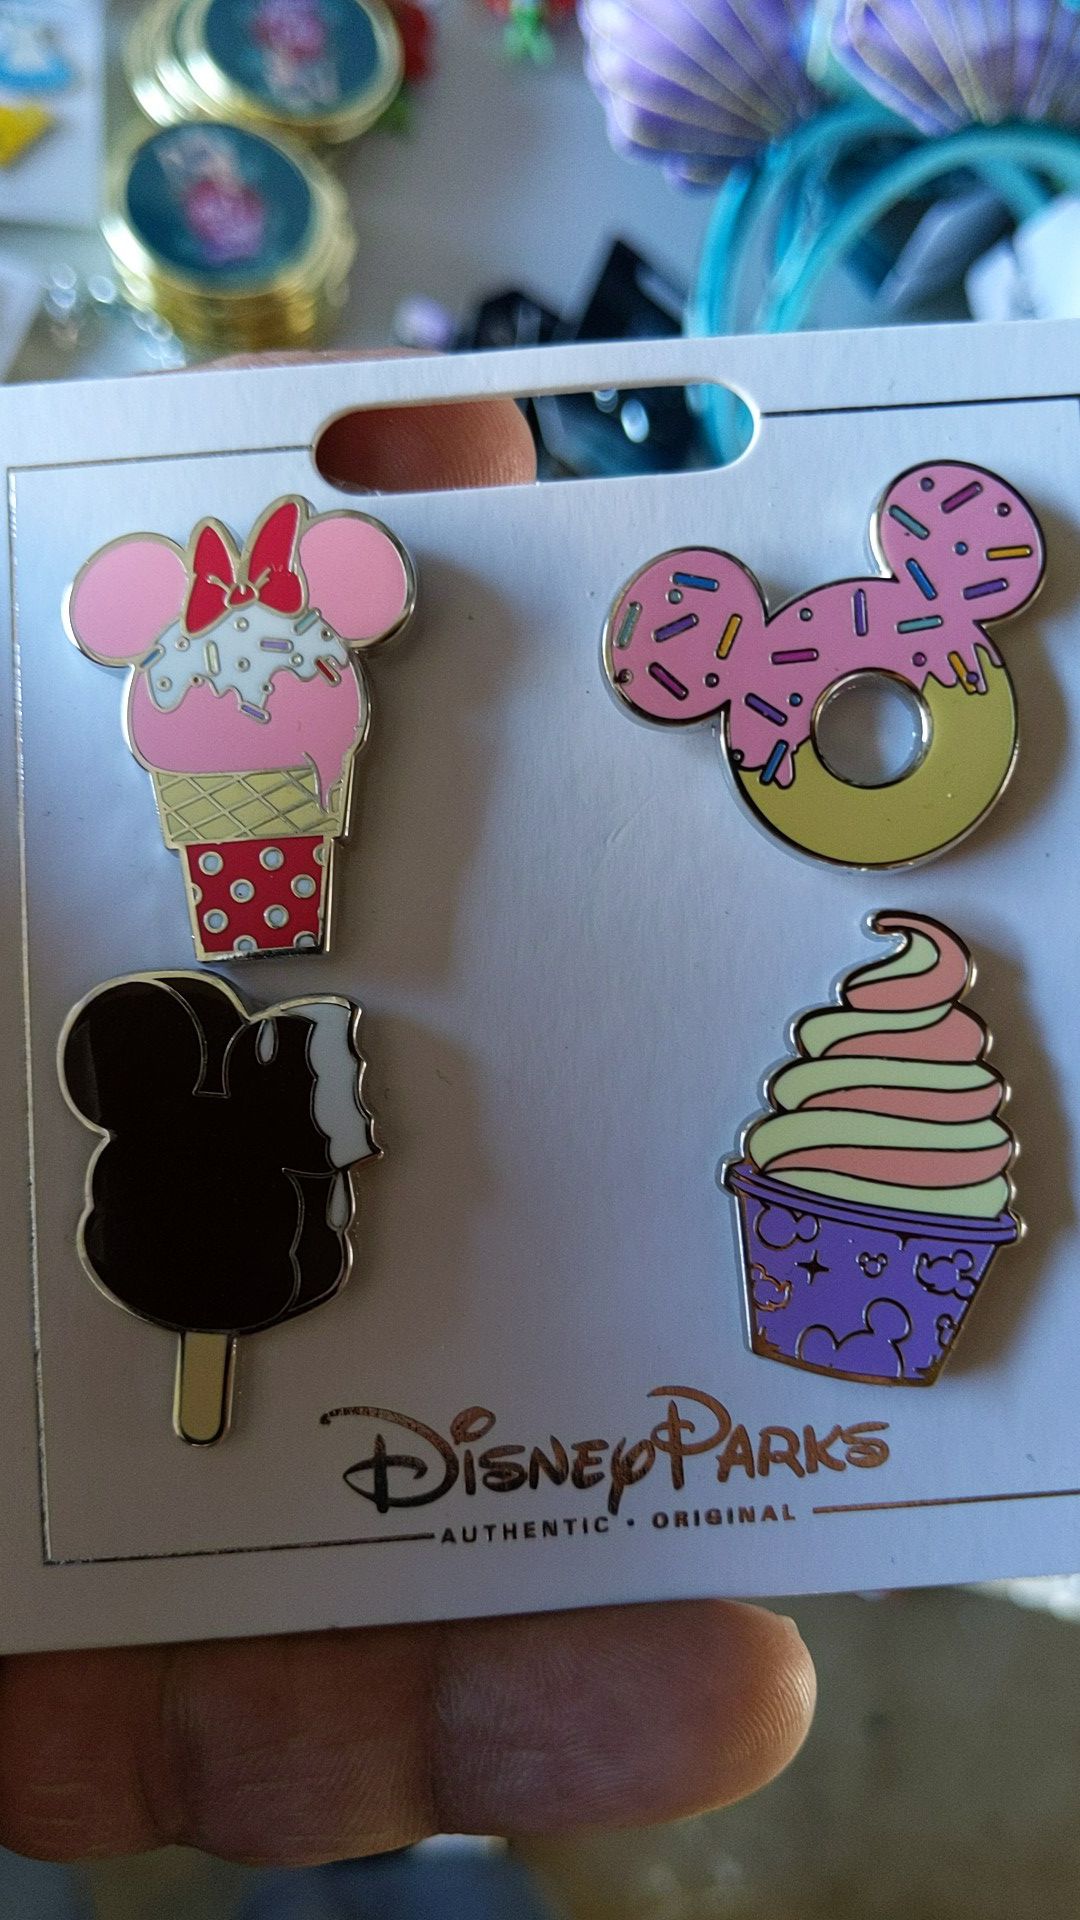 Disney treats collectible pin set new 10$